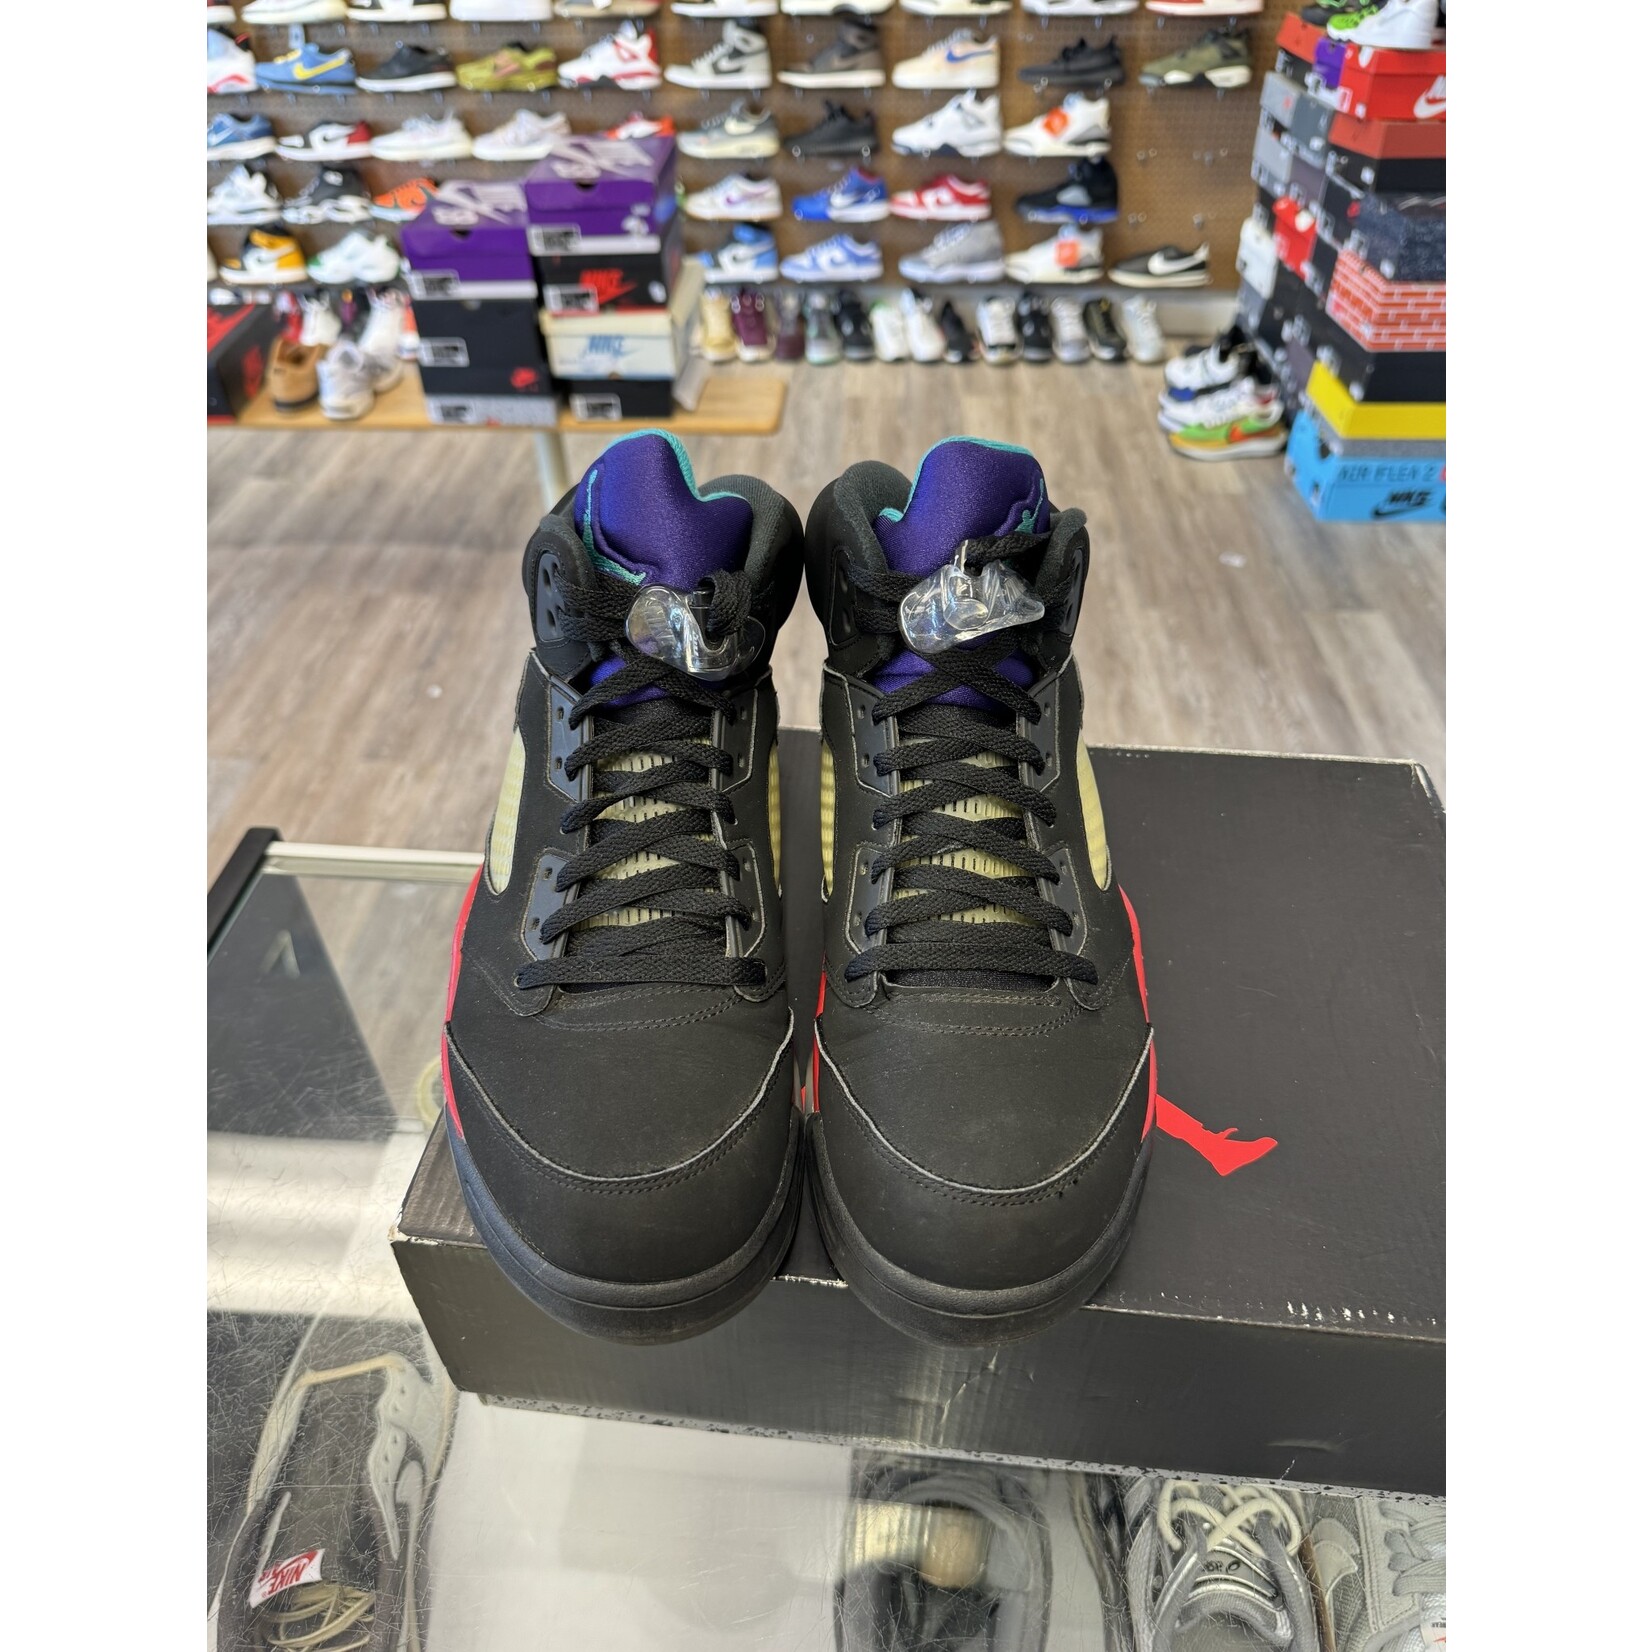 Jordan Jordan 5 Retro Top 3 Size 11.5, PREOWNED